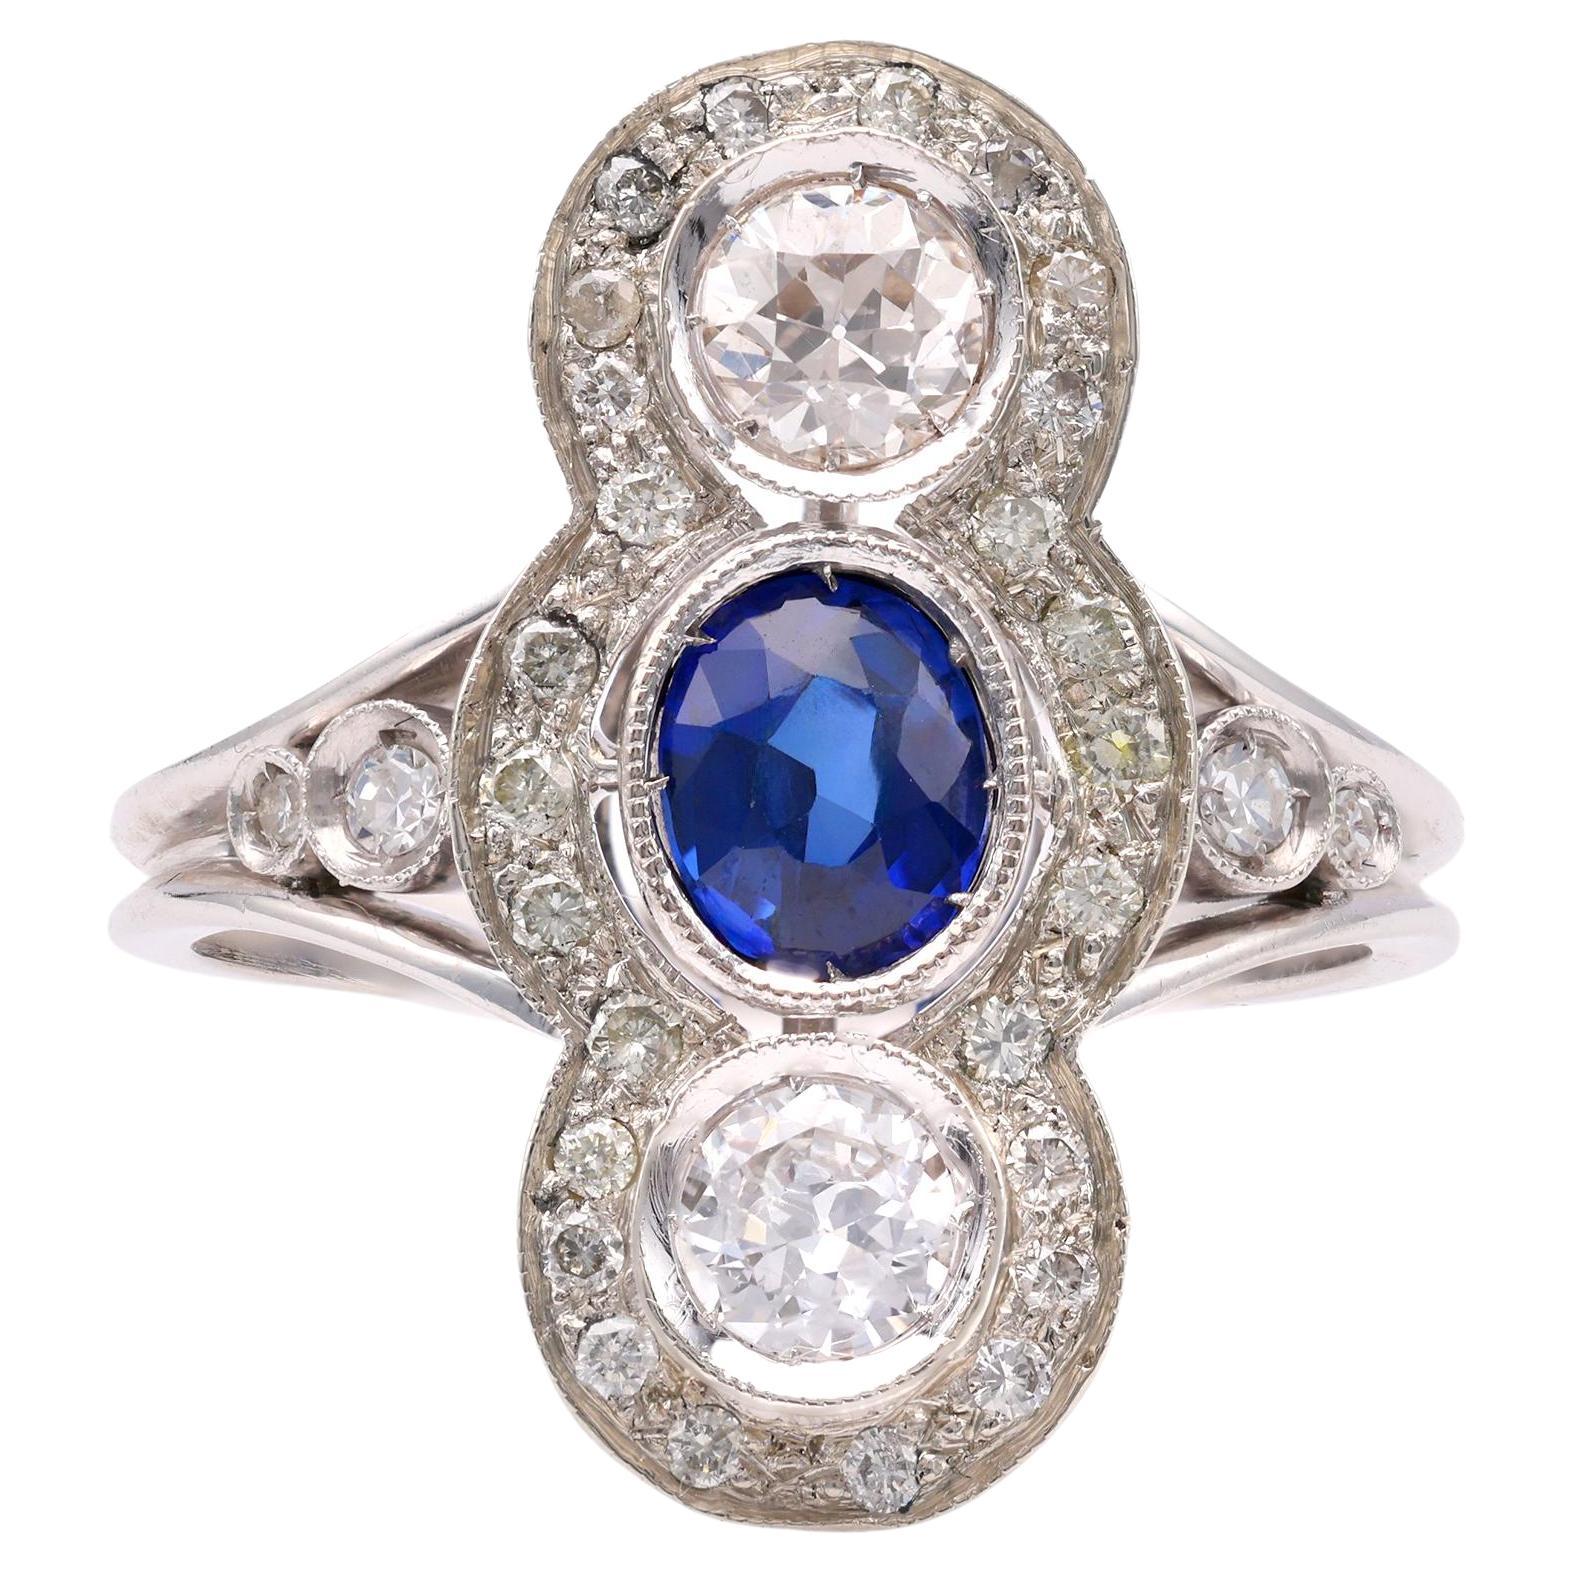 One Art Deco Revival Sapphire Diamond 18k White Gold Ring